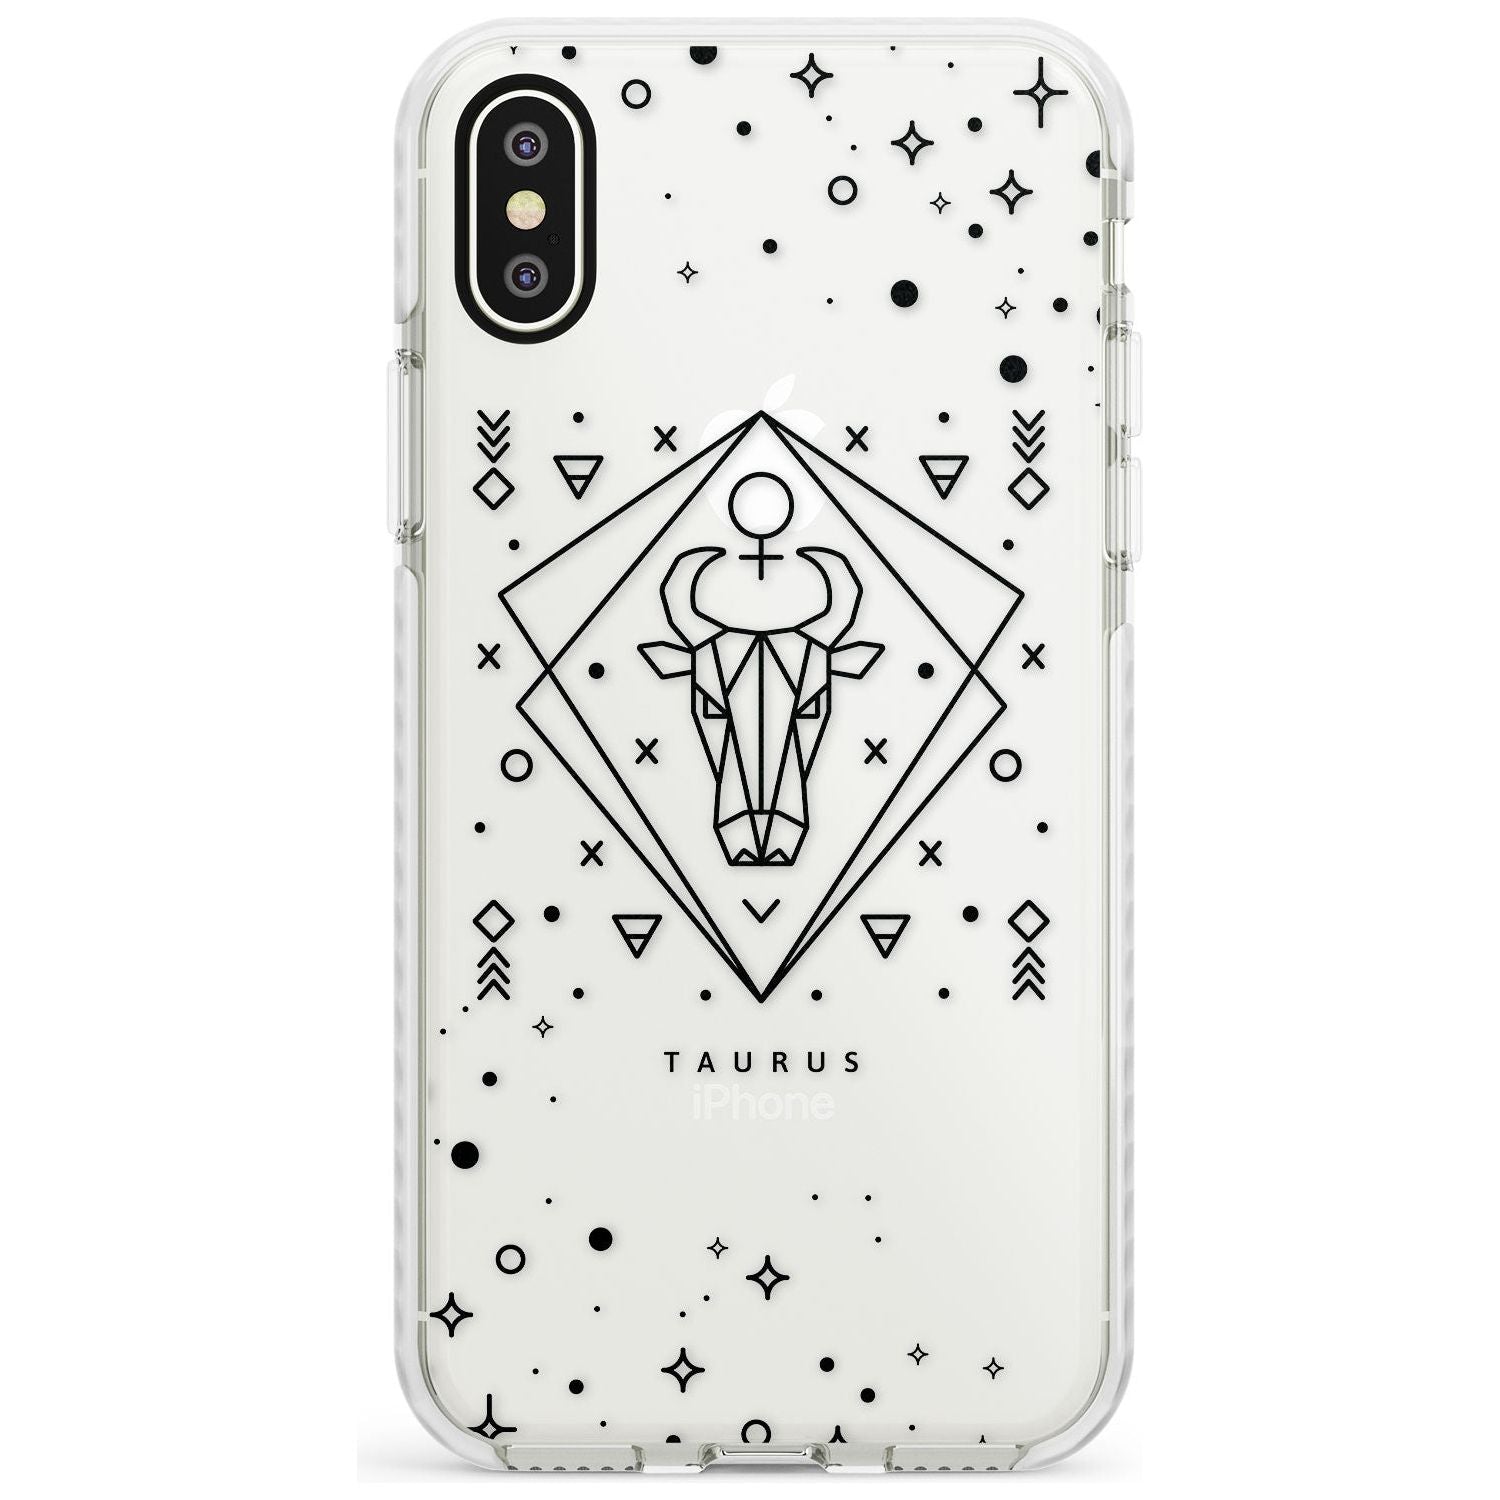 Taurus Emblem - Transparent Design Impact Phone Case for iPhone X XS Max XR